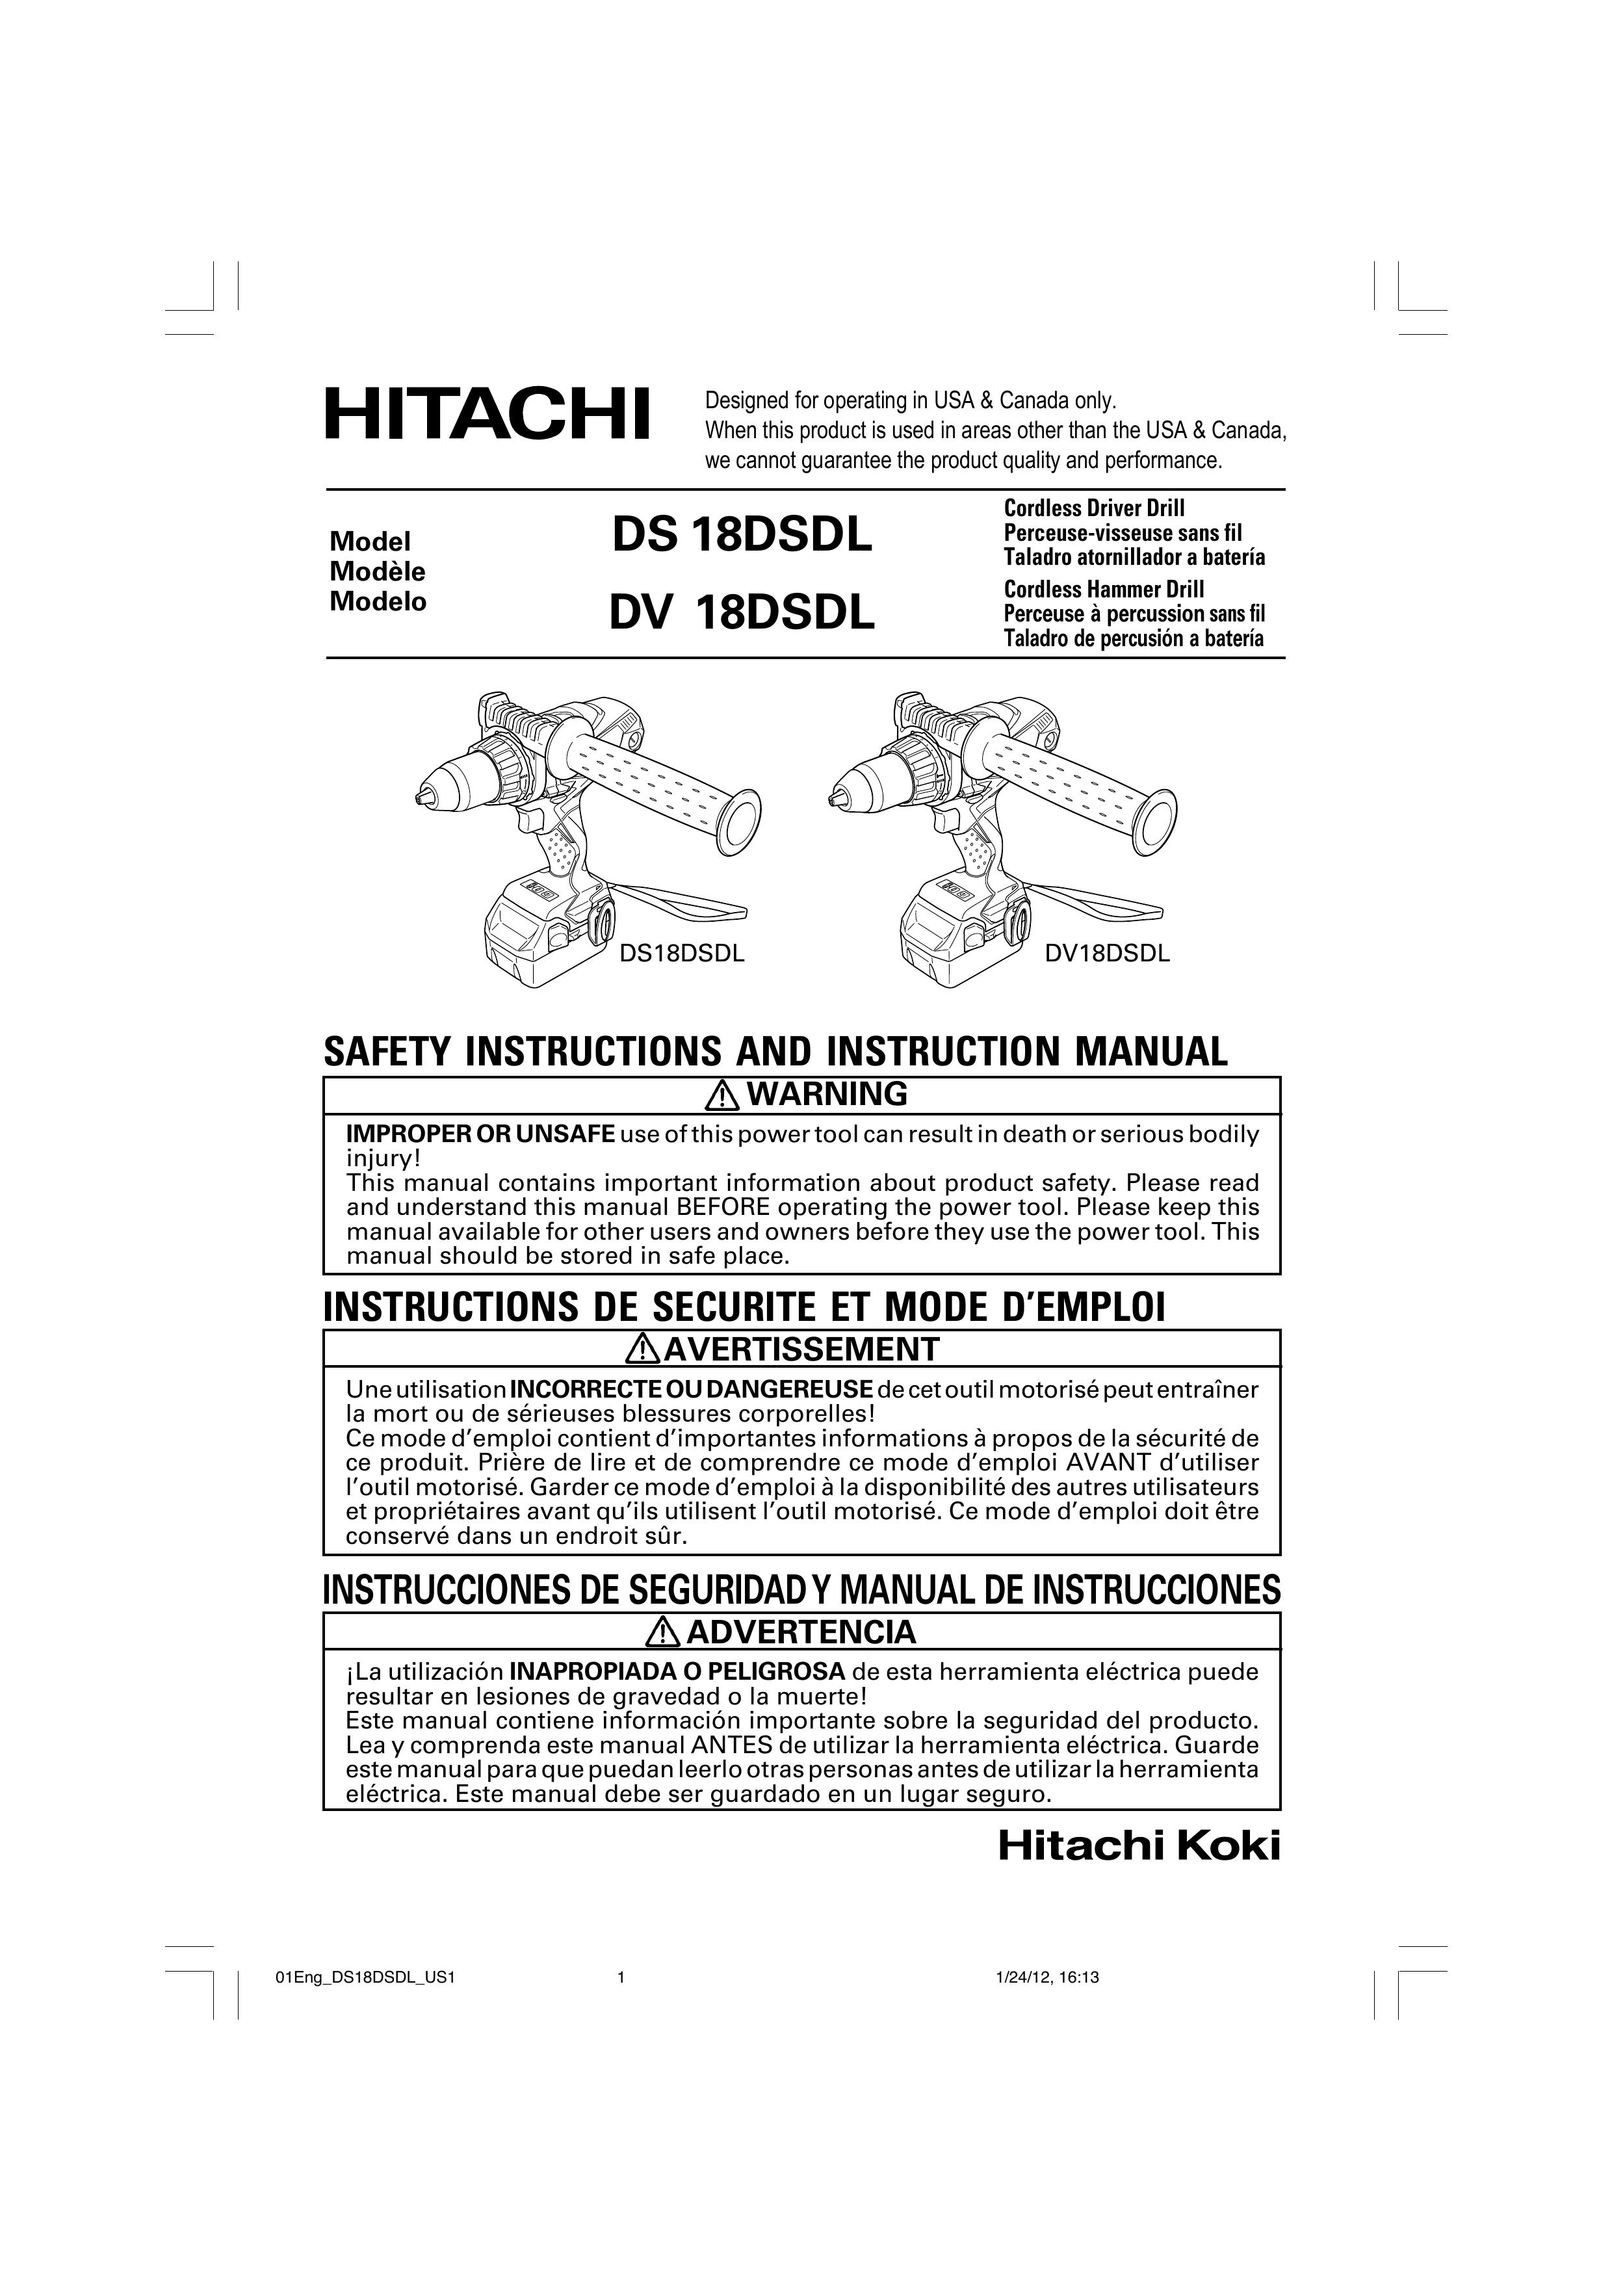 Hitachi DV18DSDLP4 Cordless Drill User Manual